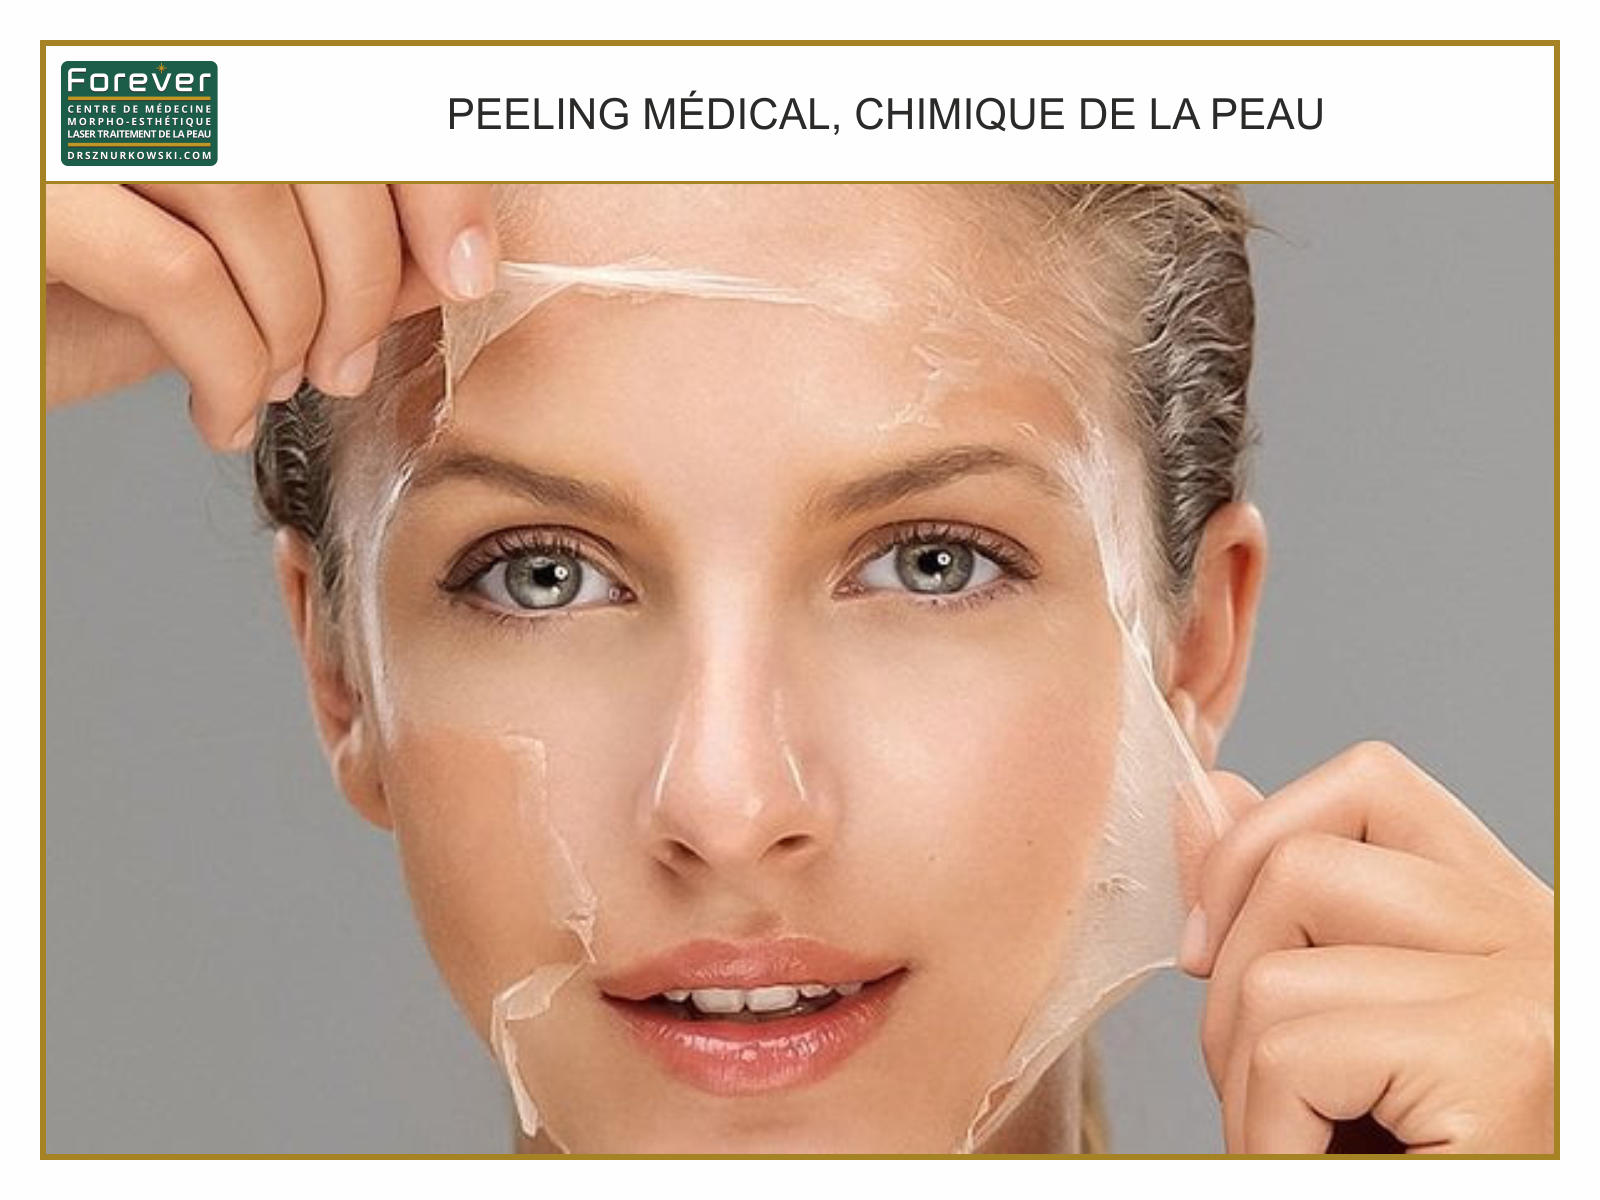 Medical, Chemical Skin Peel 1 (80x60) FR.jpg